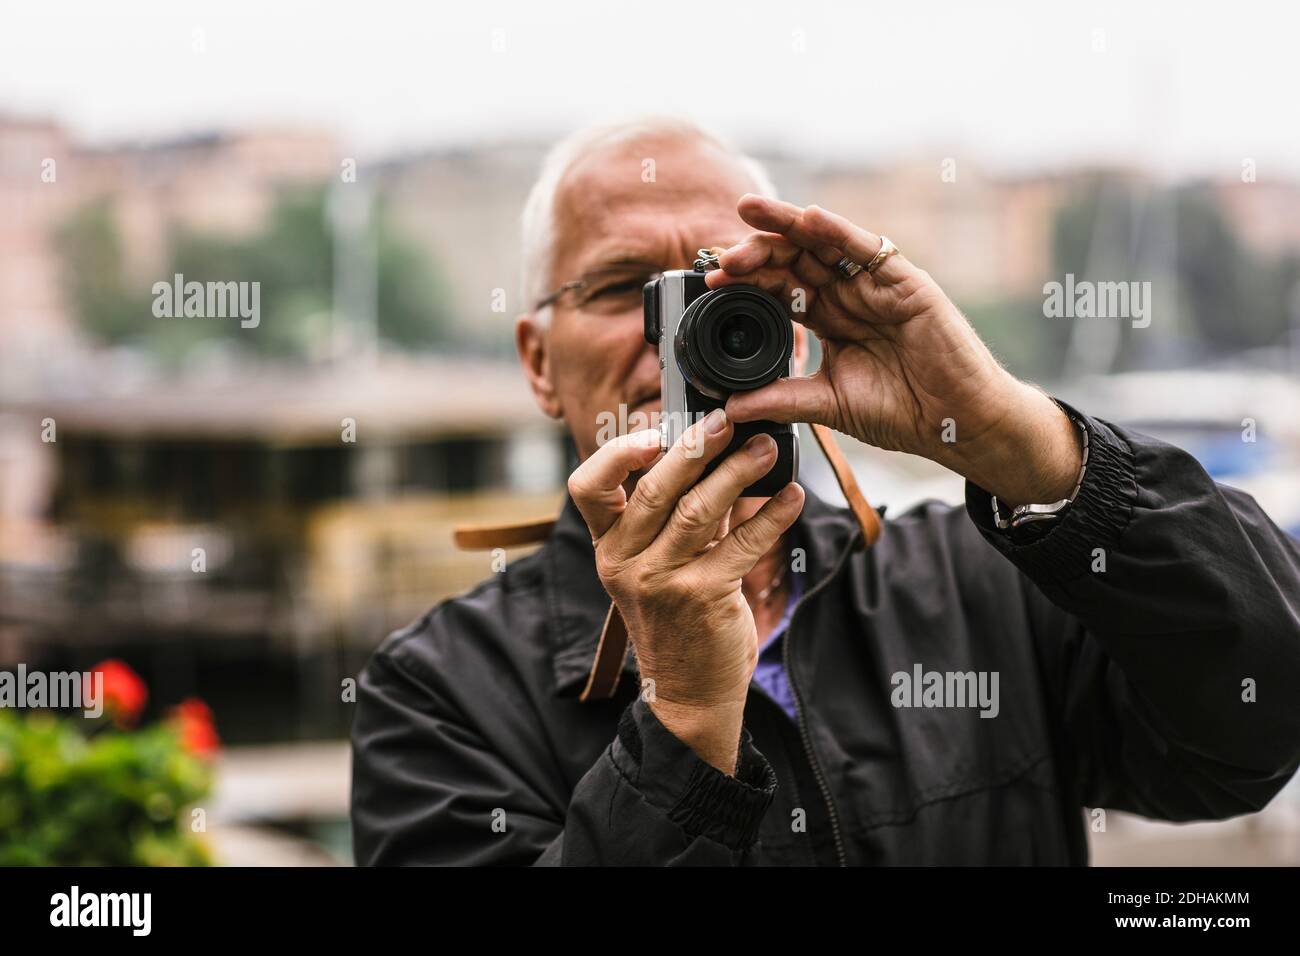 Senior man using camera during photography course Stock Photo